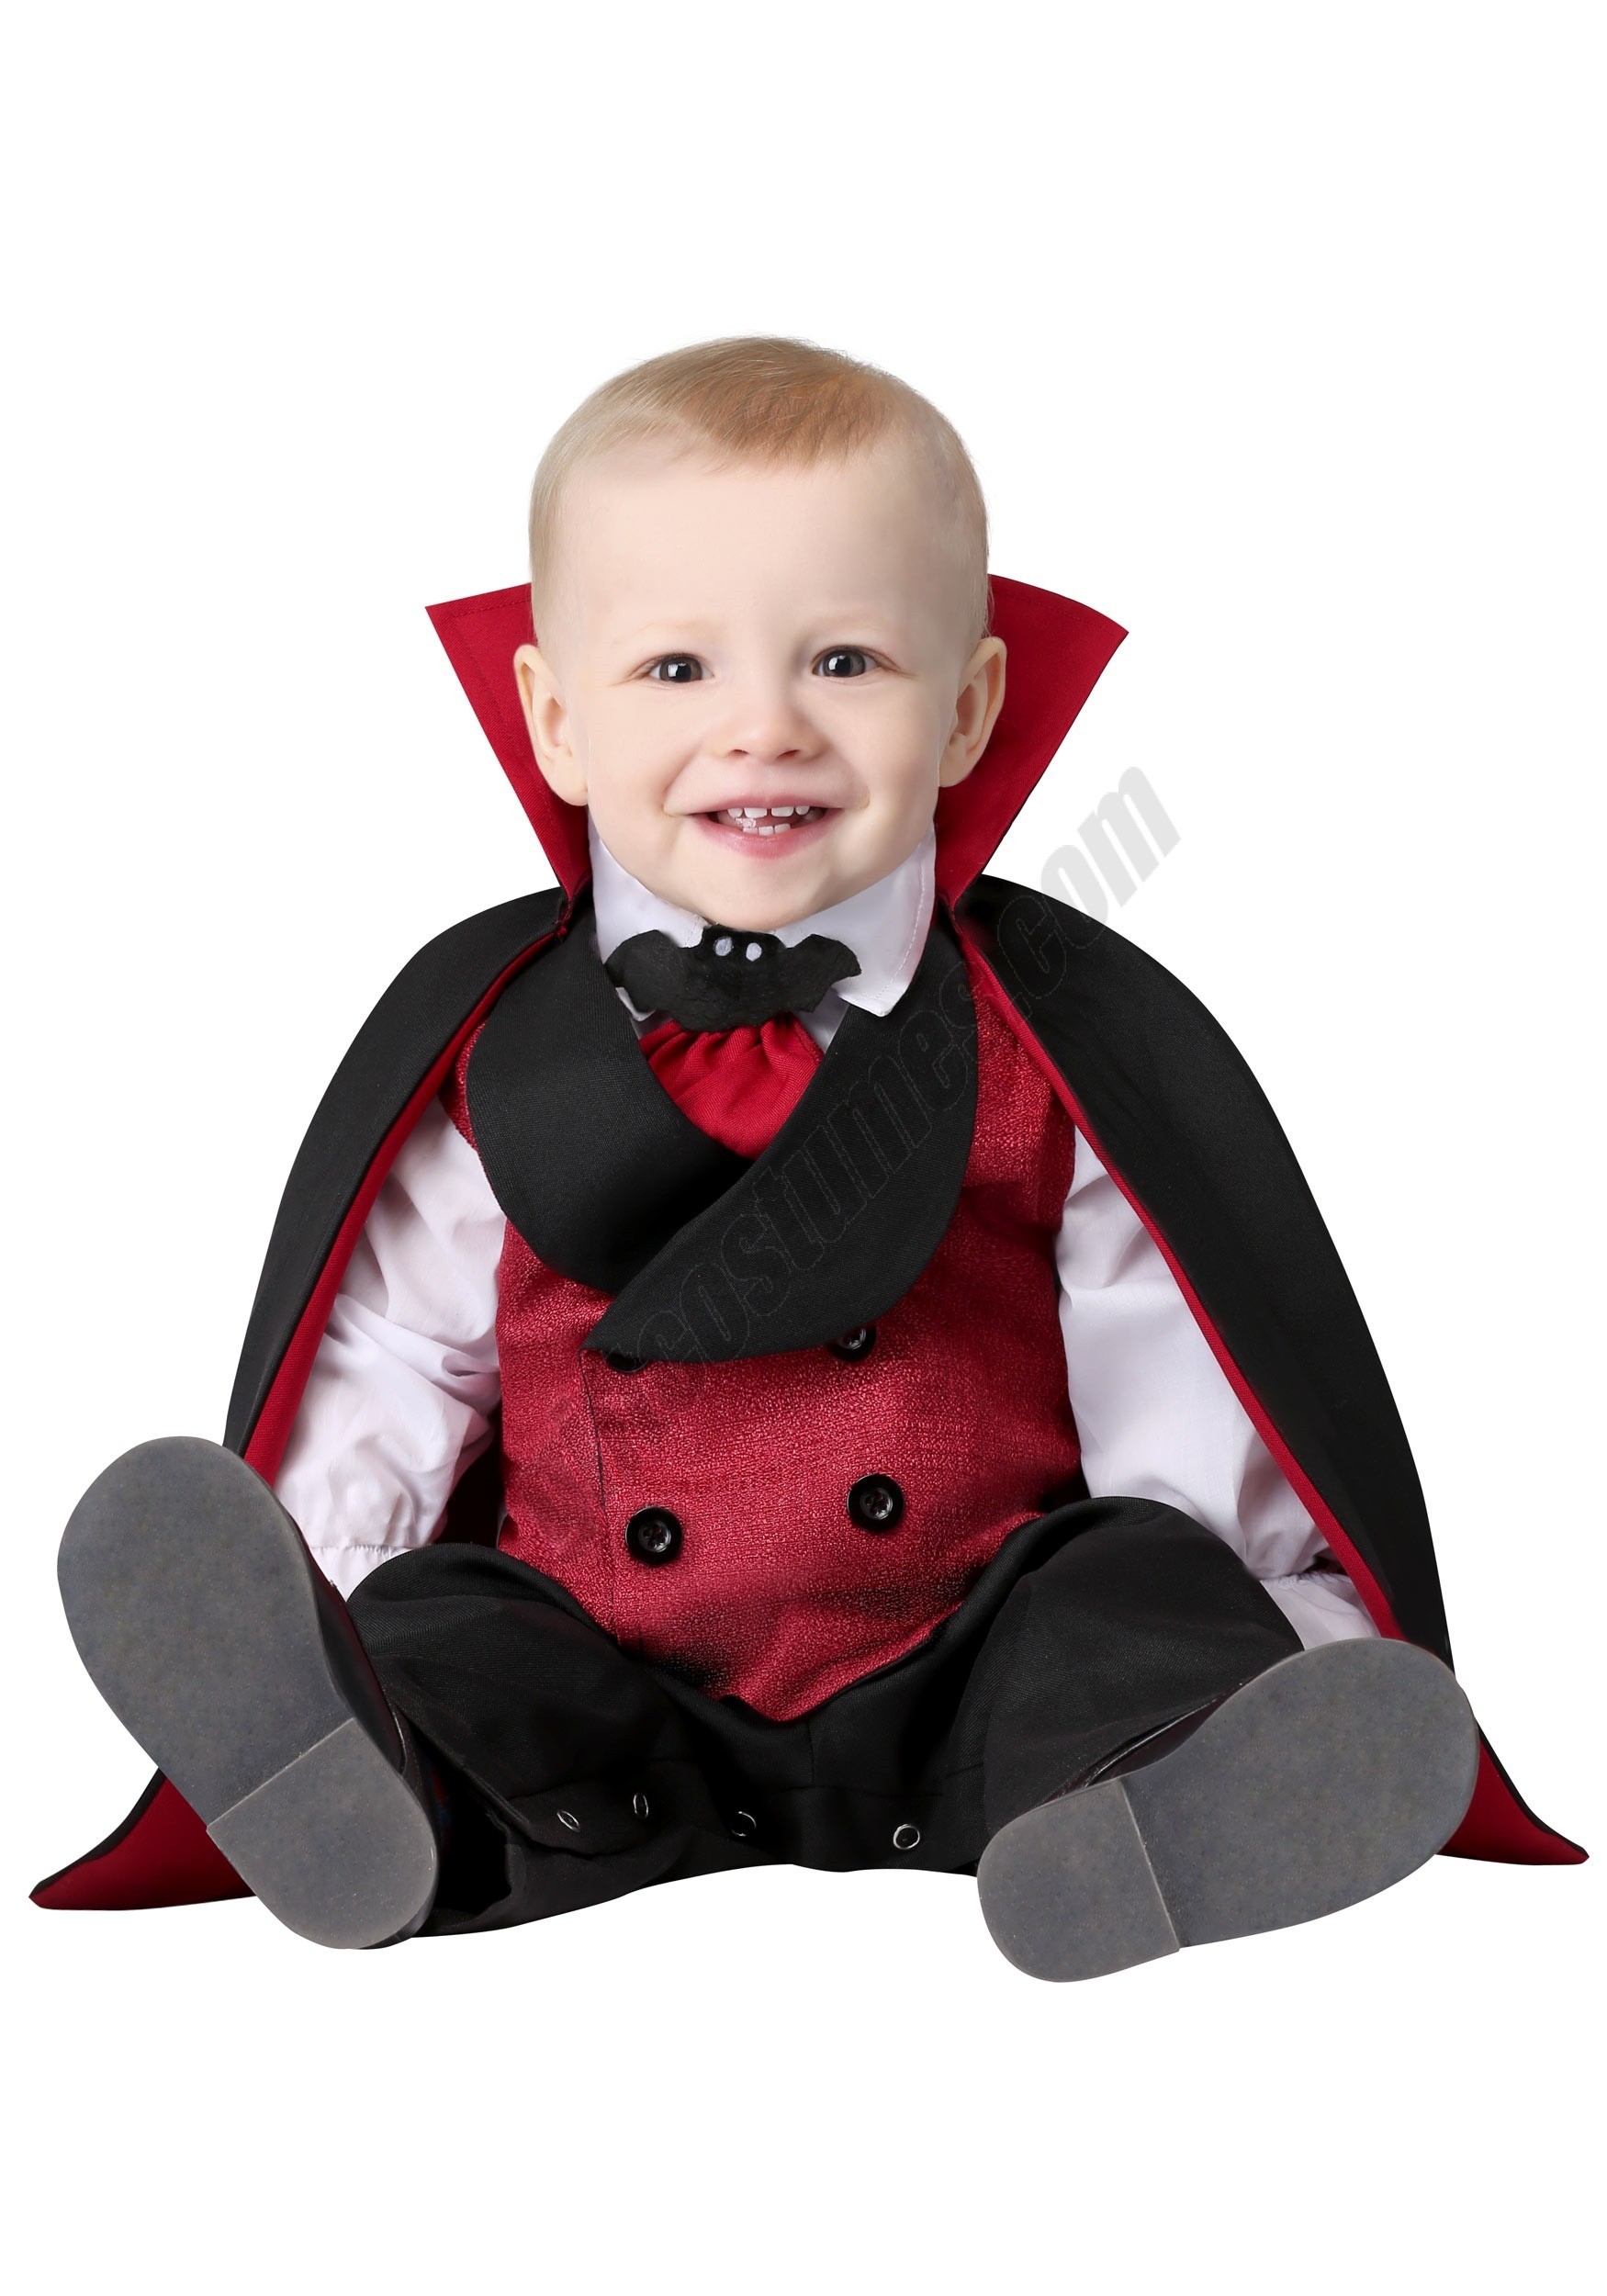 Infant Count Dracula Costume Promotions - Infant Count Dracula Costume Promotions